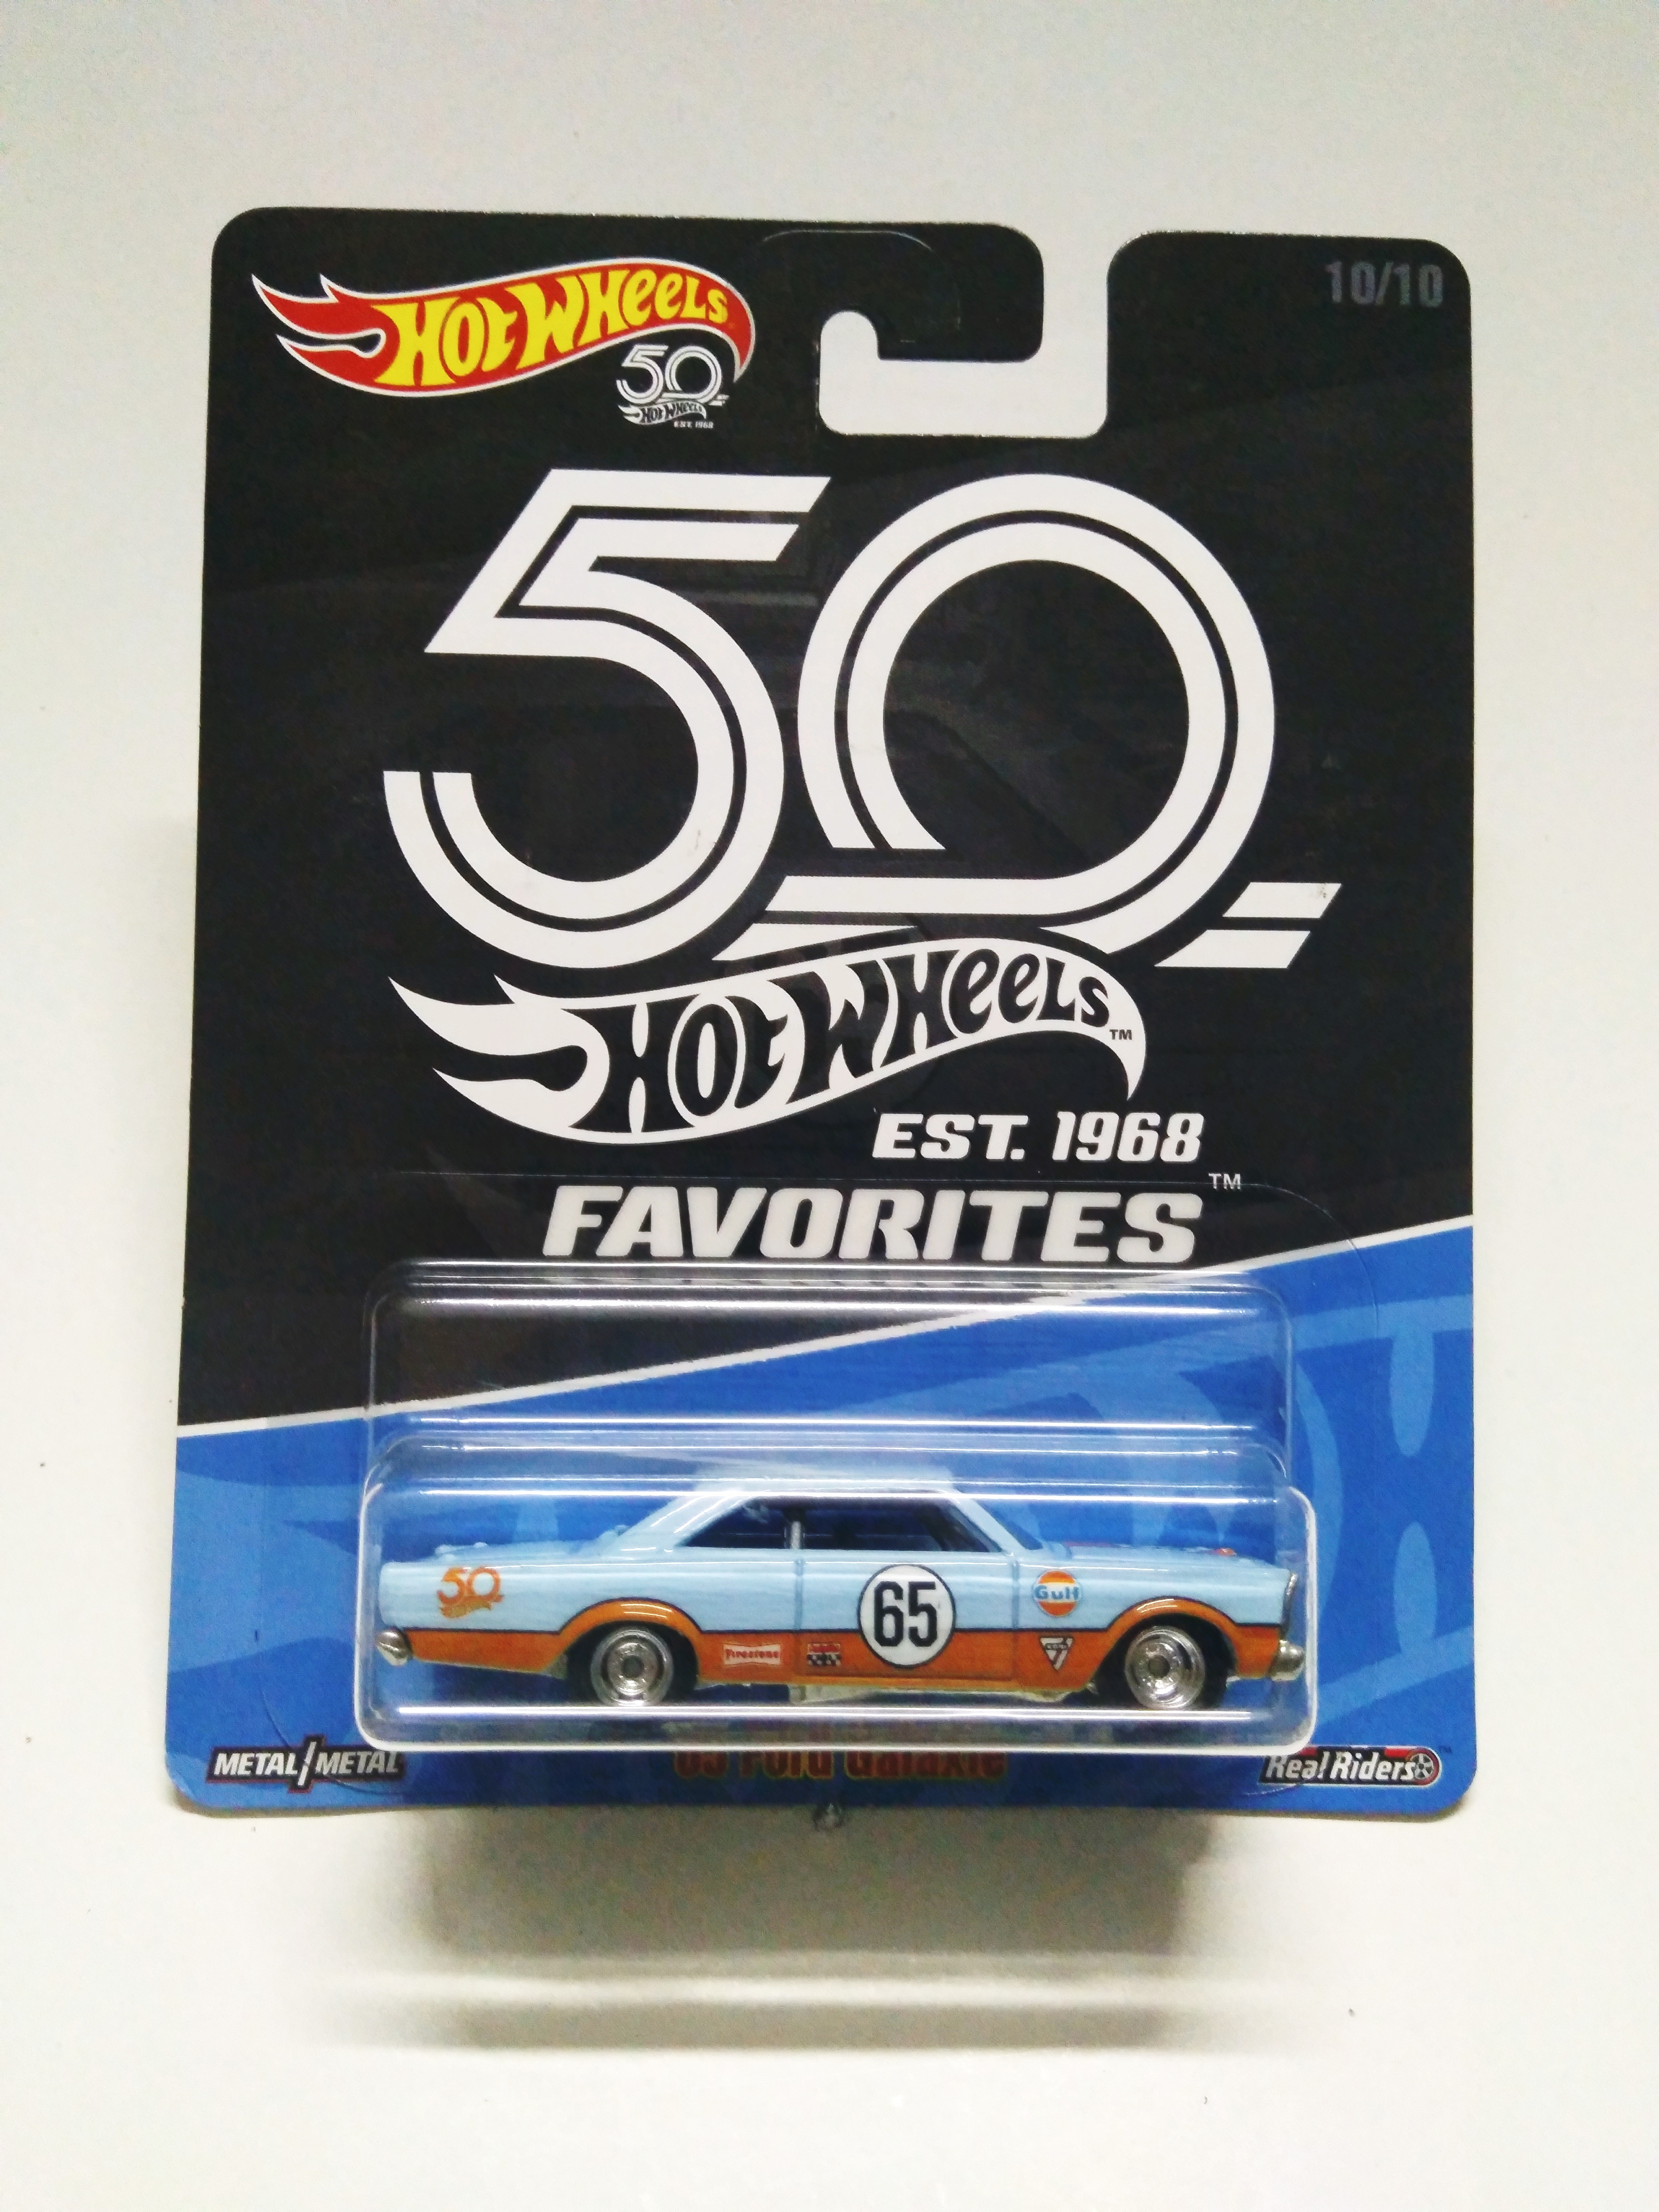 50th anniversary favorites hot wheels